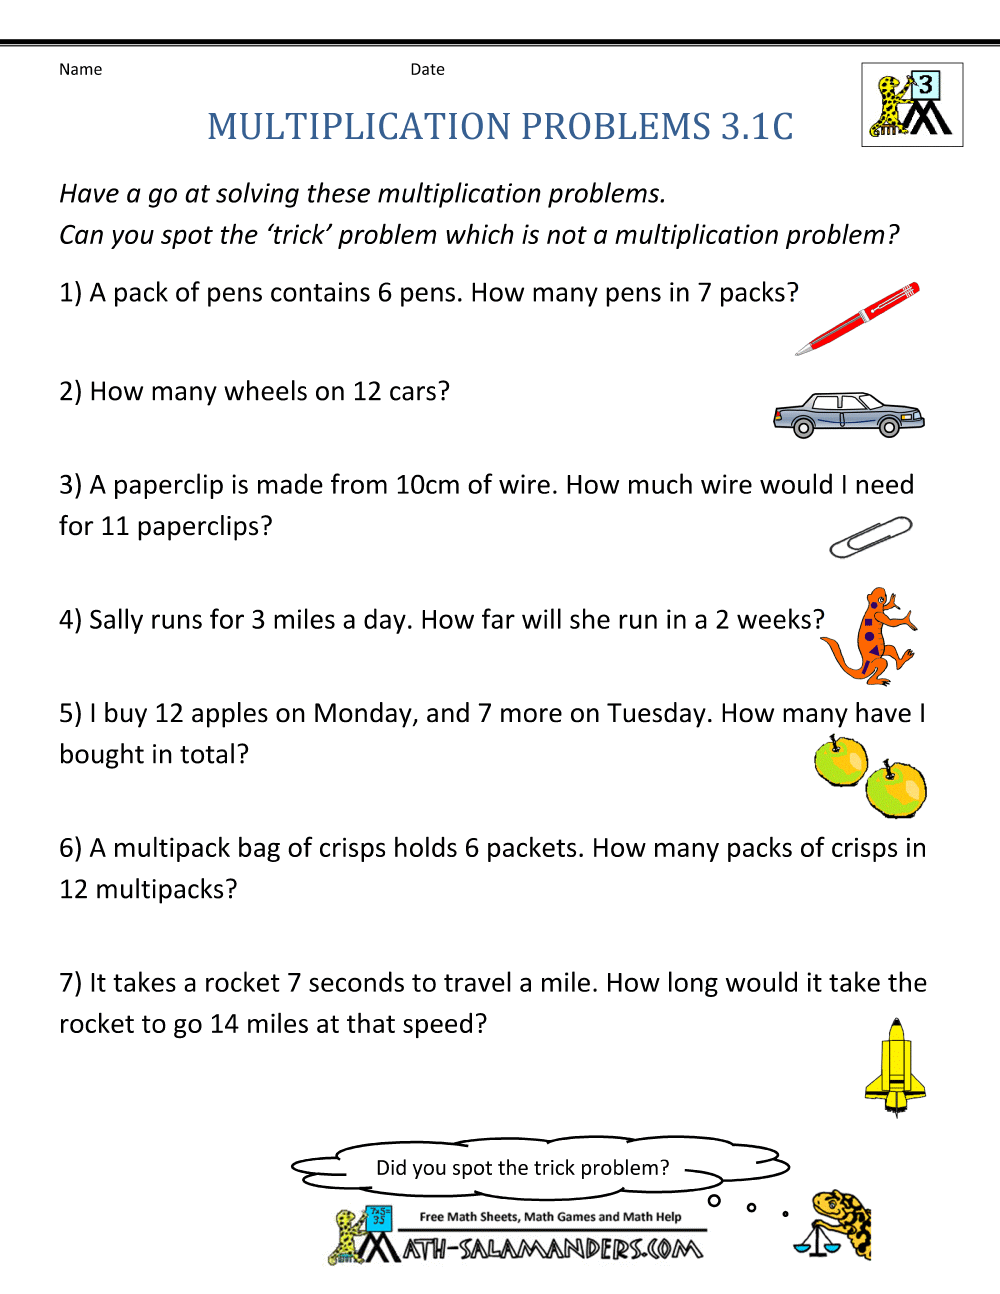 worksheet 4th Grade Multiplication Word Problems multiplication word problem worksheets 3rd grade problems 3 1c